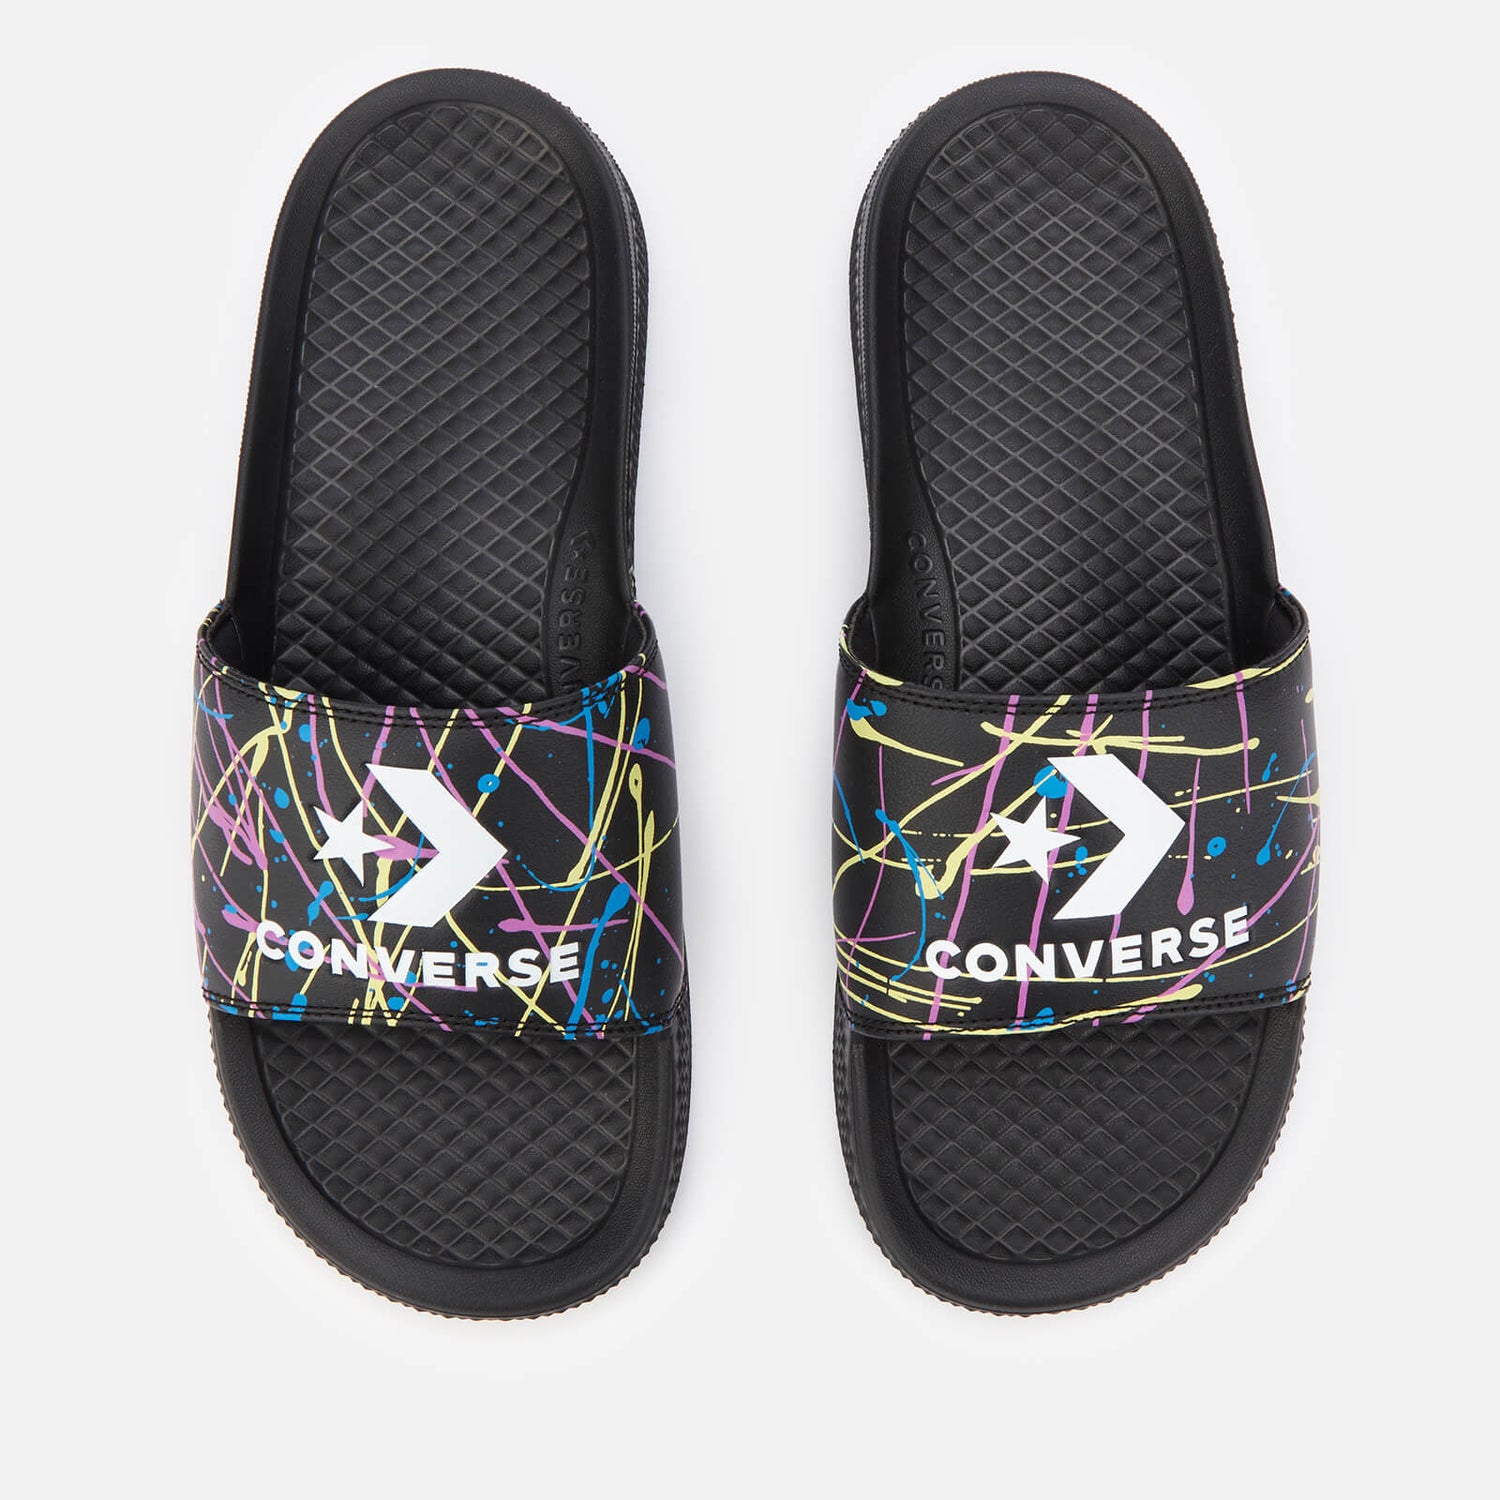 Converse Men's All Star Splatter Print Slide Sandals - Black